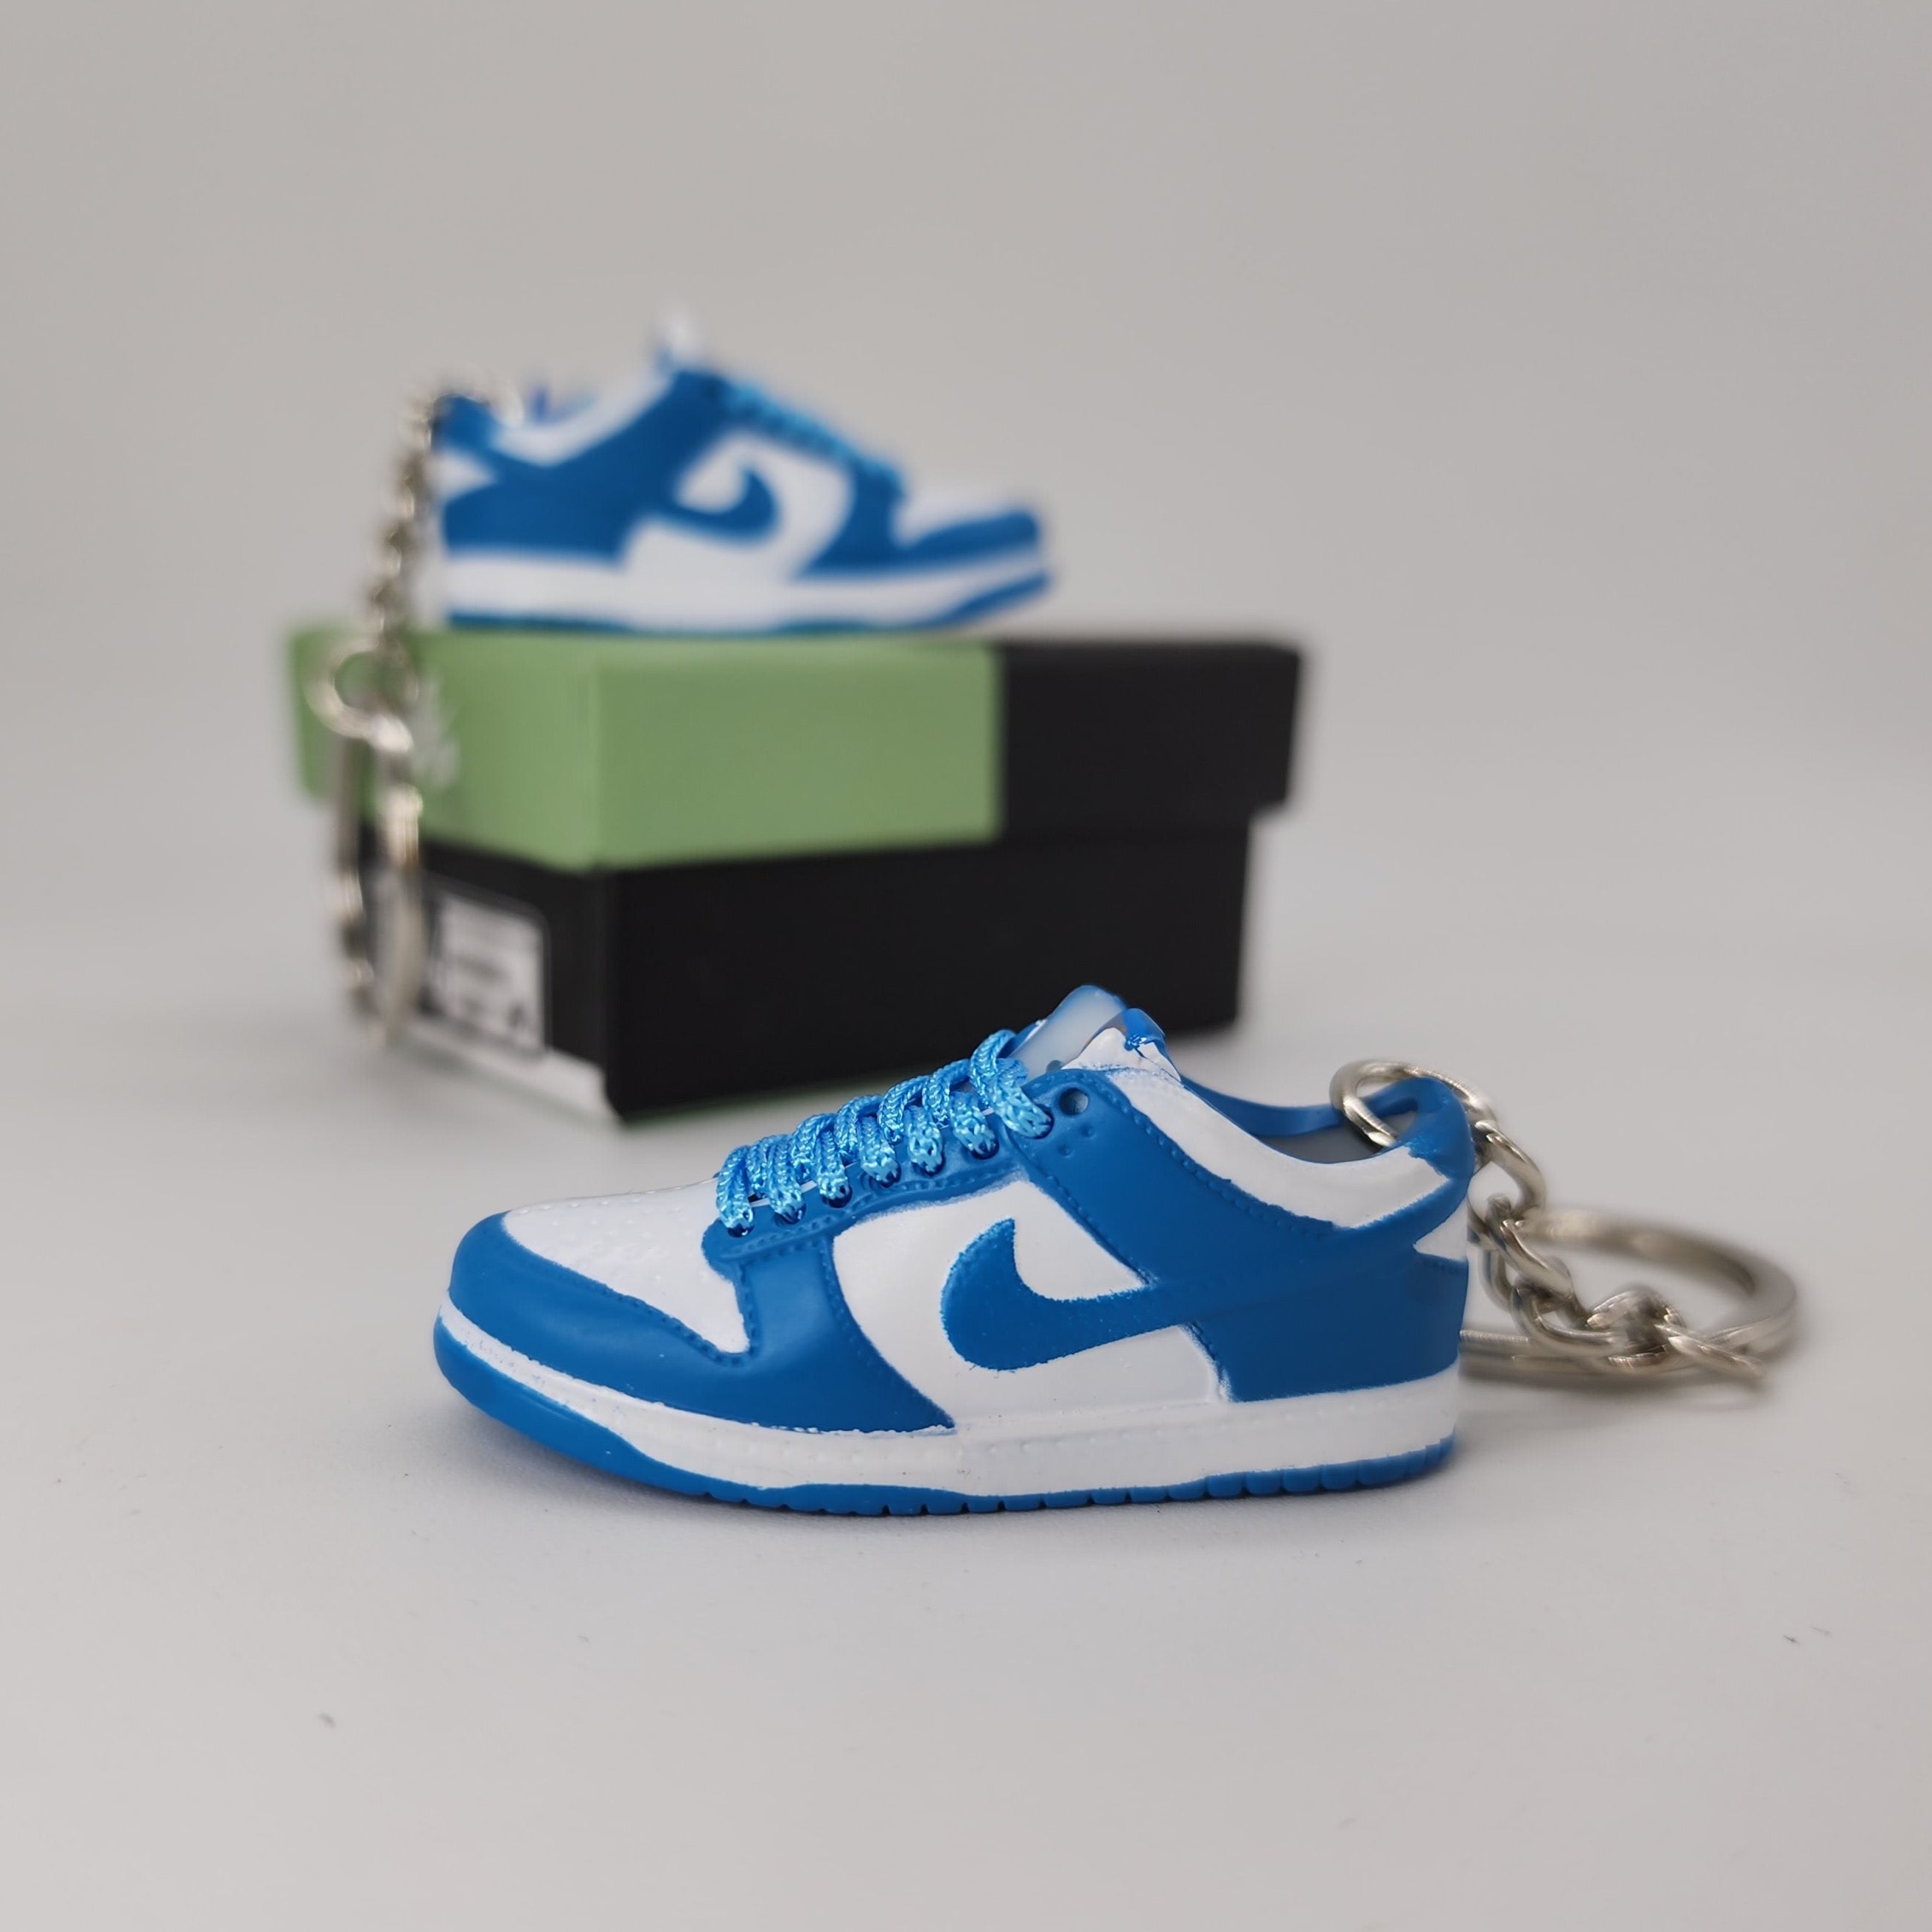 Mini Sneaker Keyring- Dunk (Blue/White)